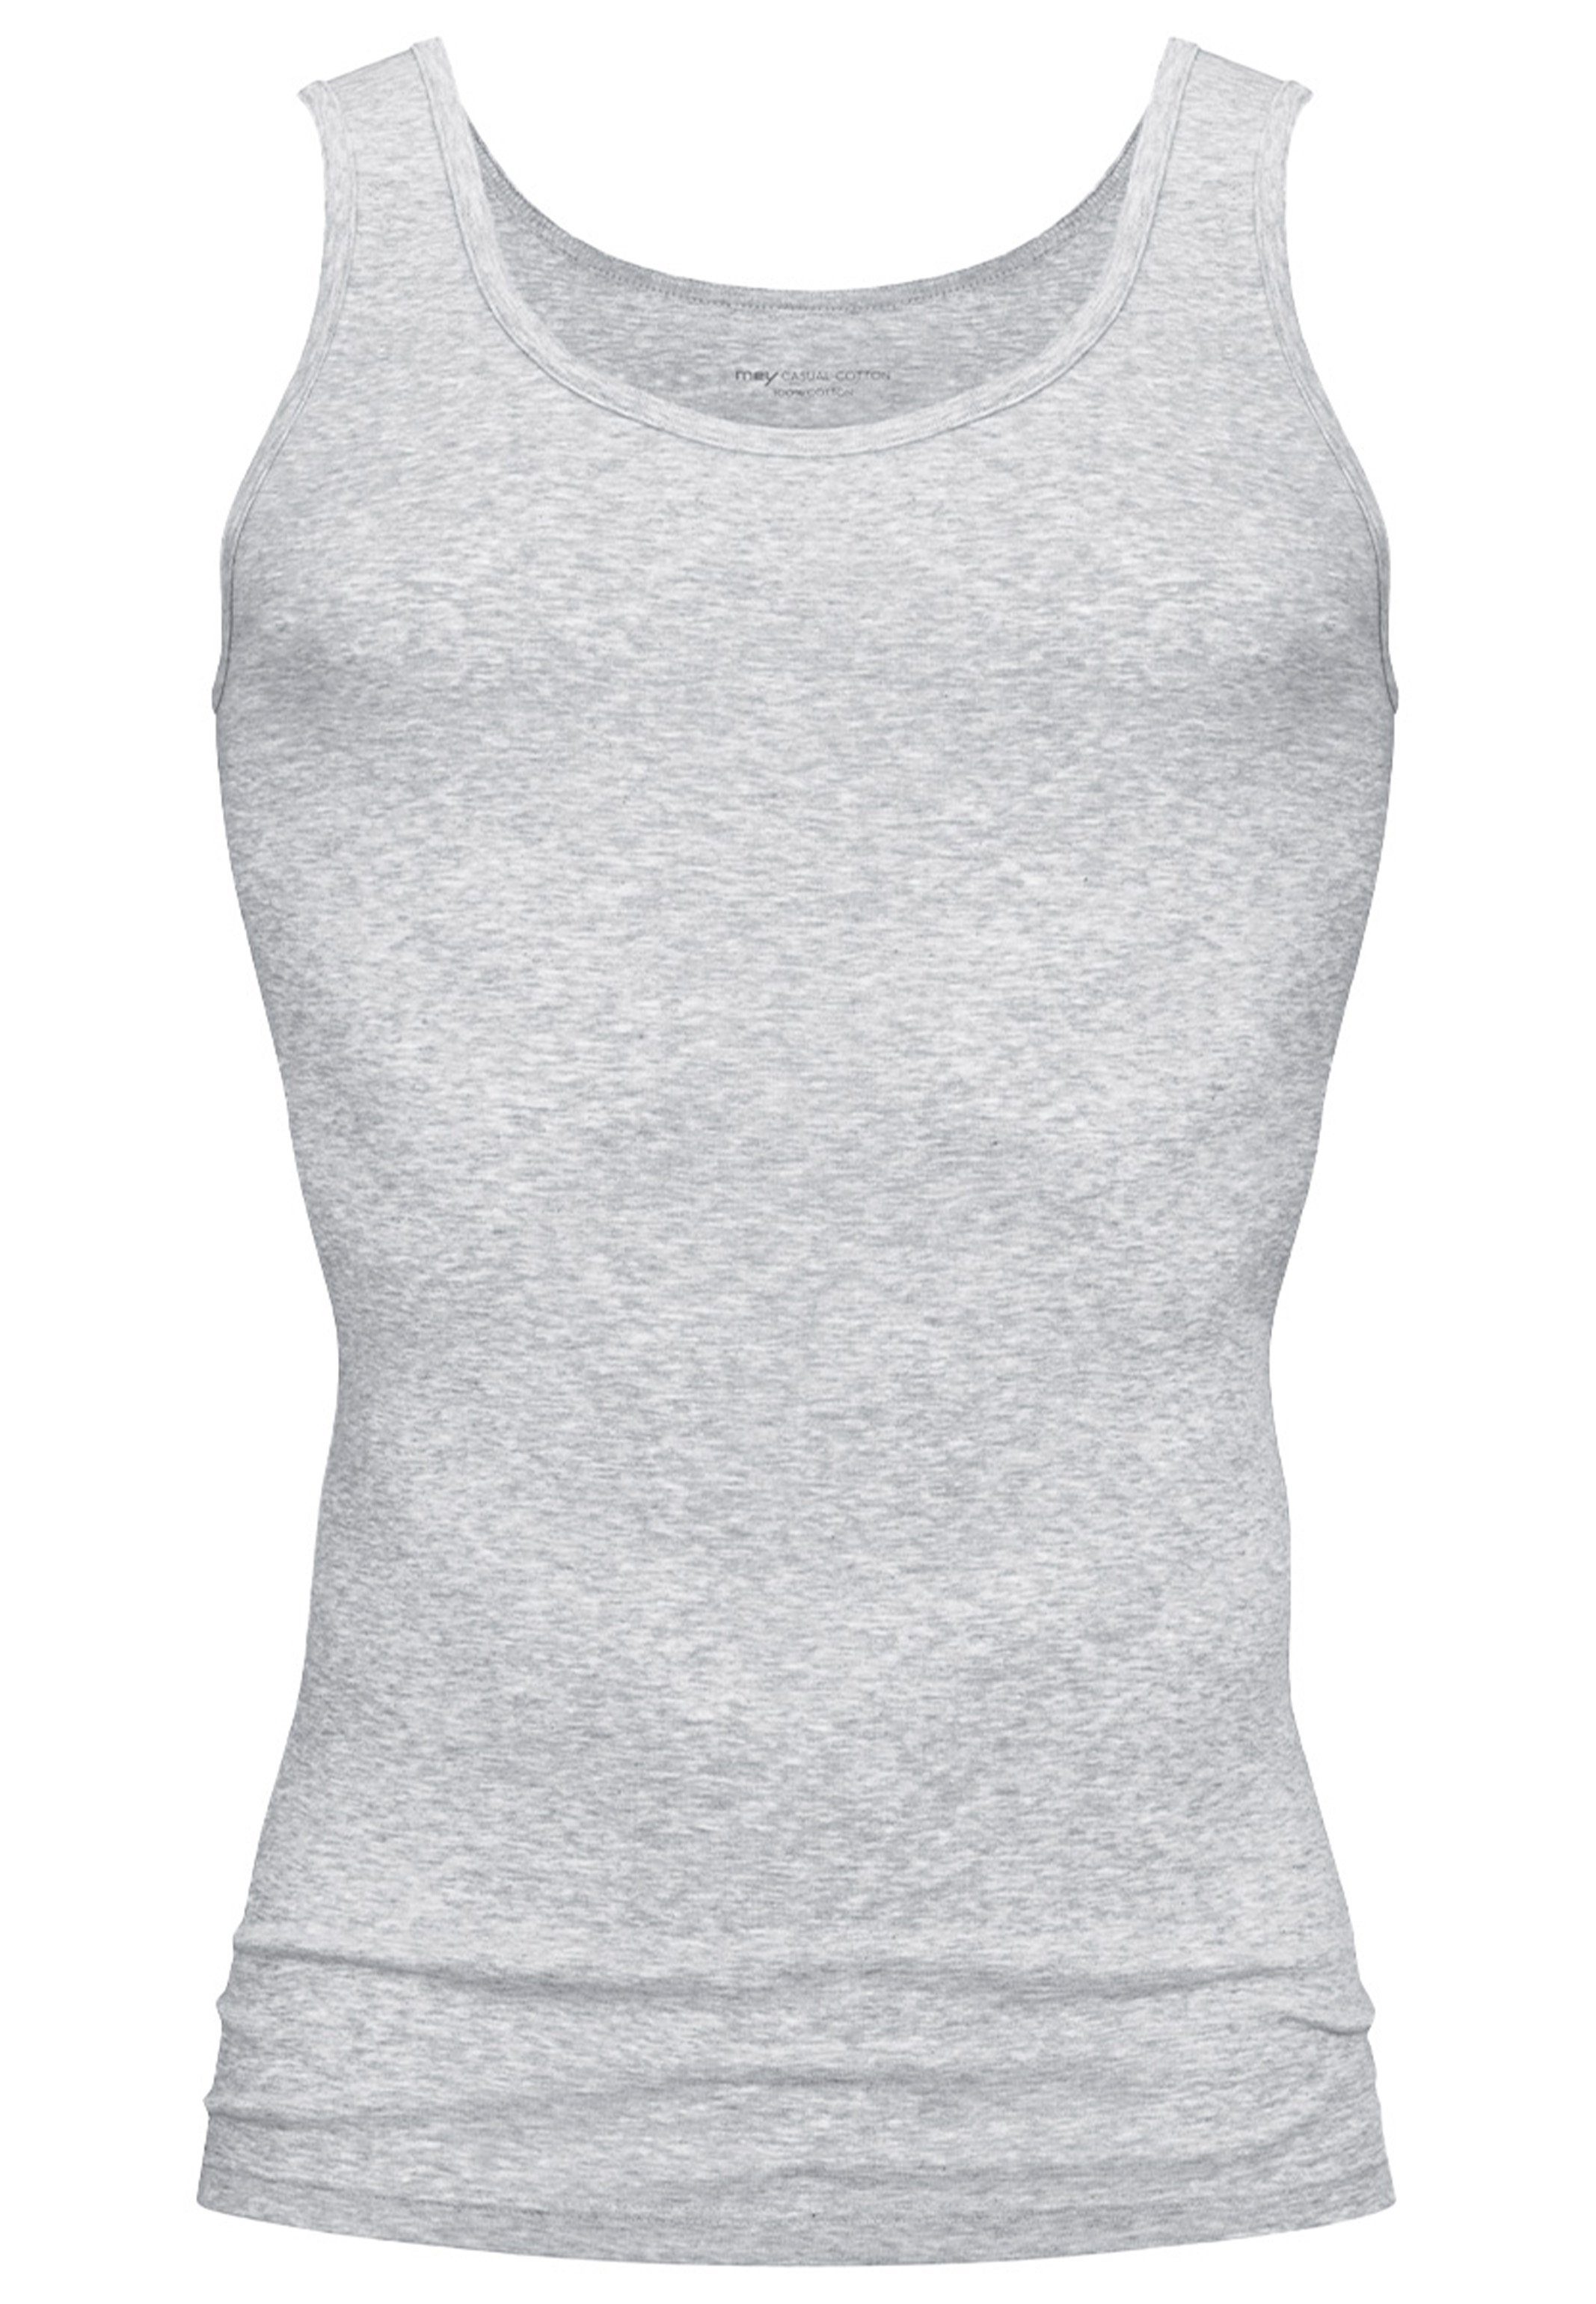 Mey Unterhemd Cotton - - Baumwolle grey Unterhemd Casual Tanktop (1-St) Light / melange